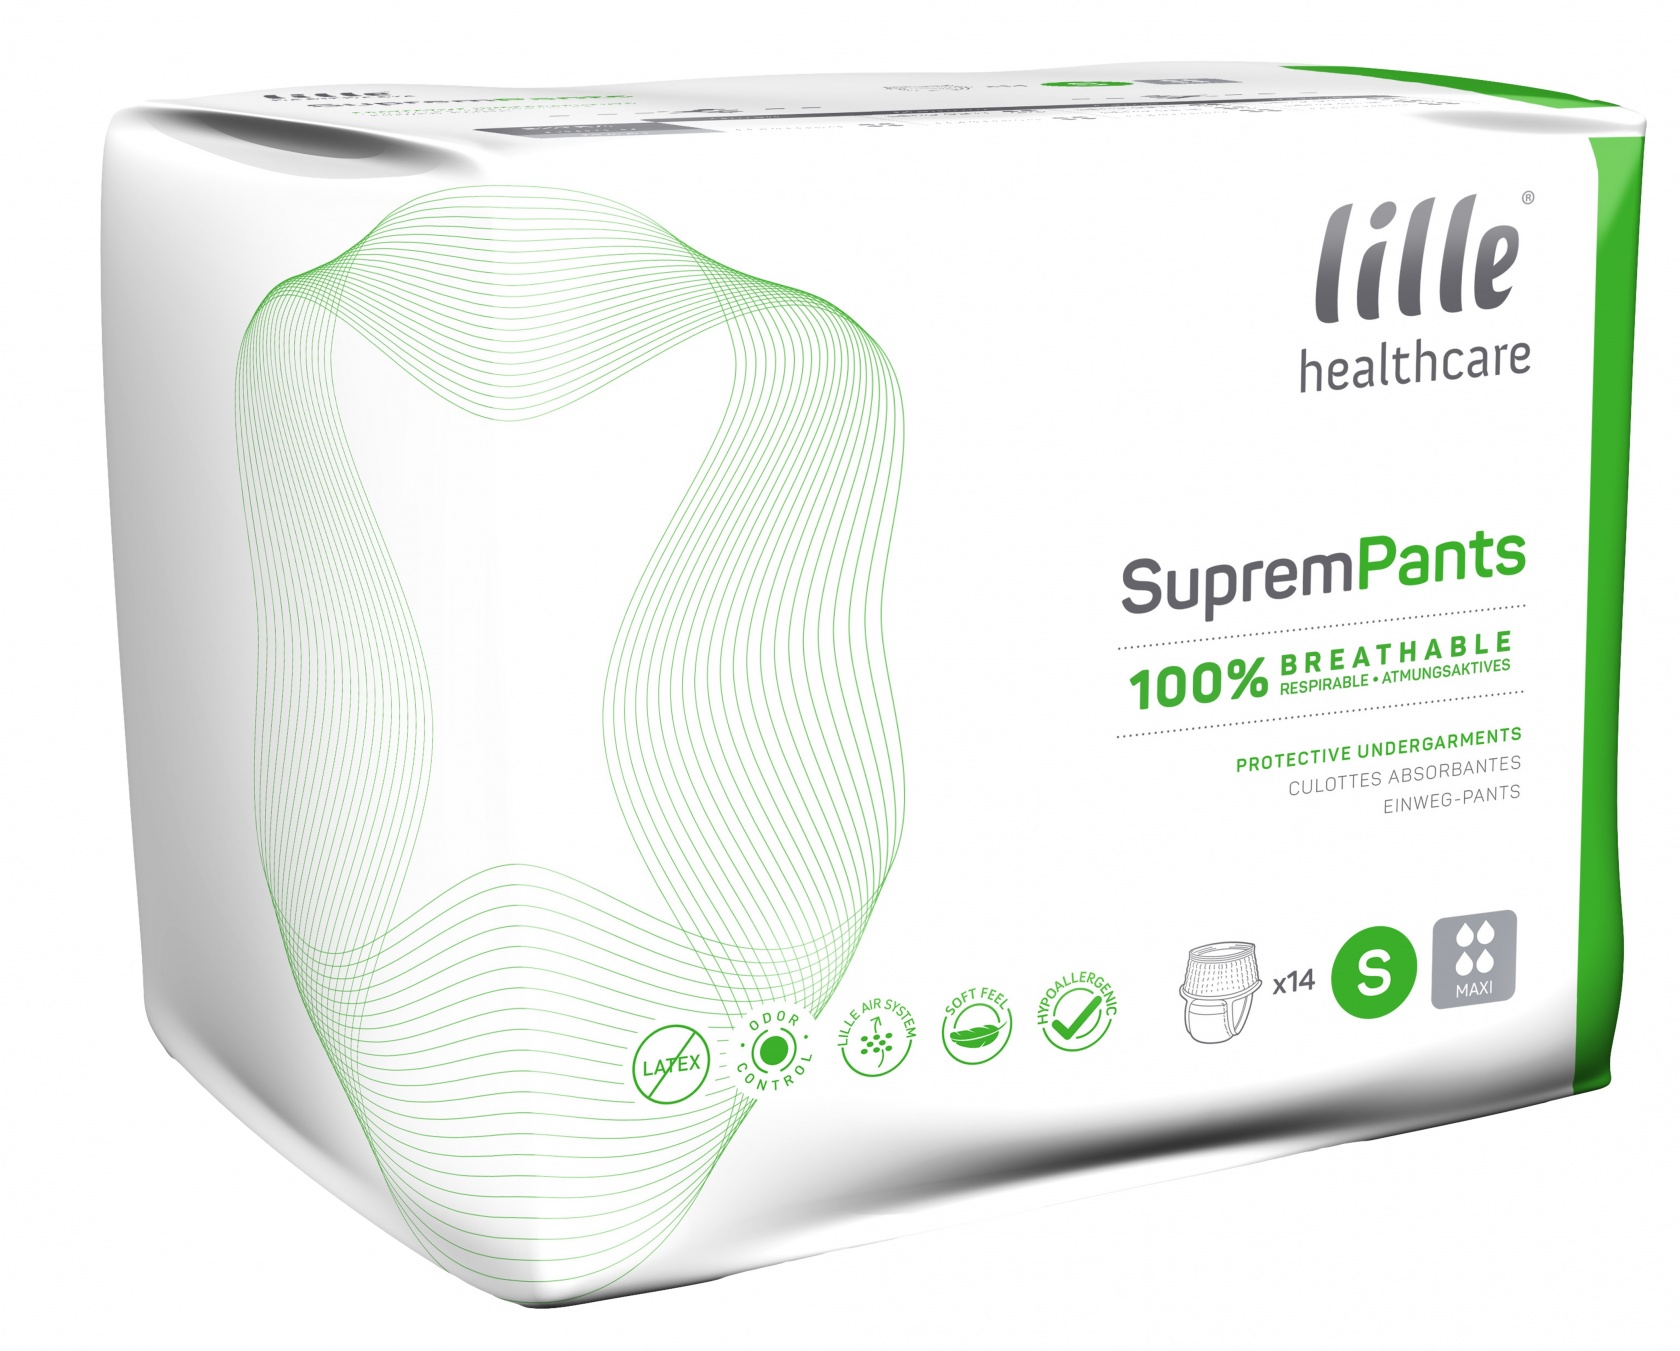 Lille Suprem Protective Underwear Maxi Medium 1900mls image 0